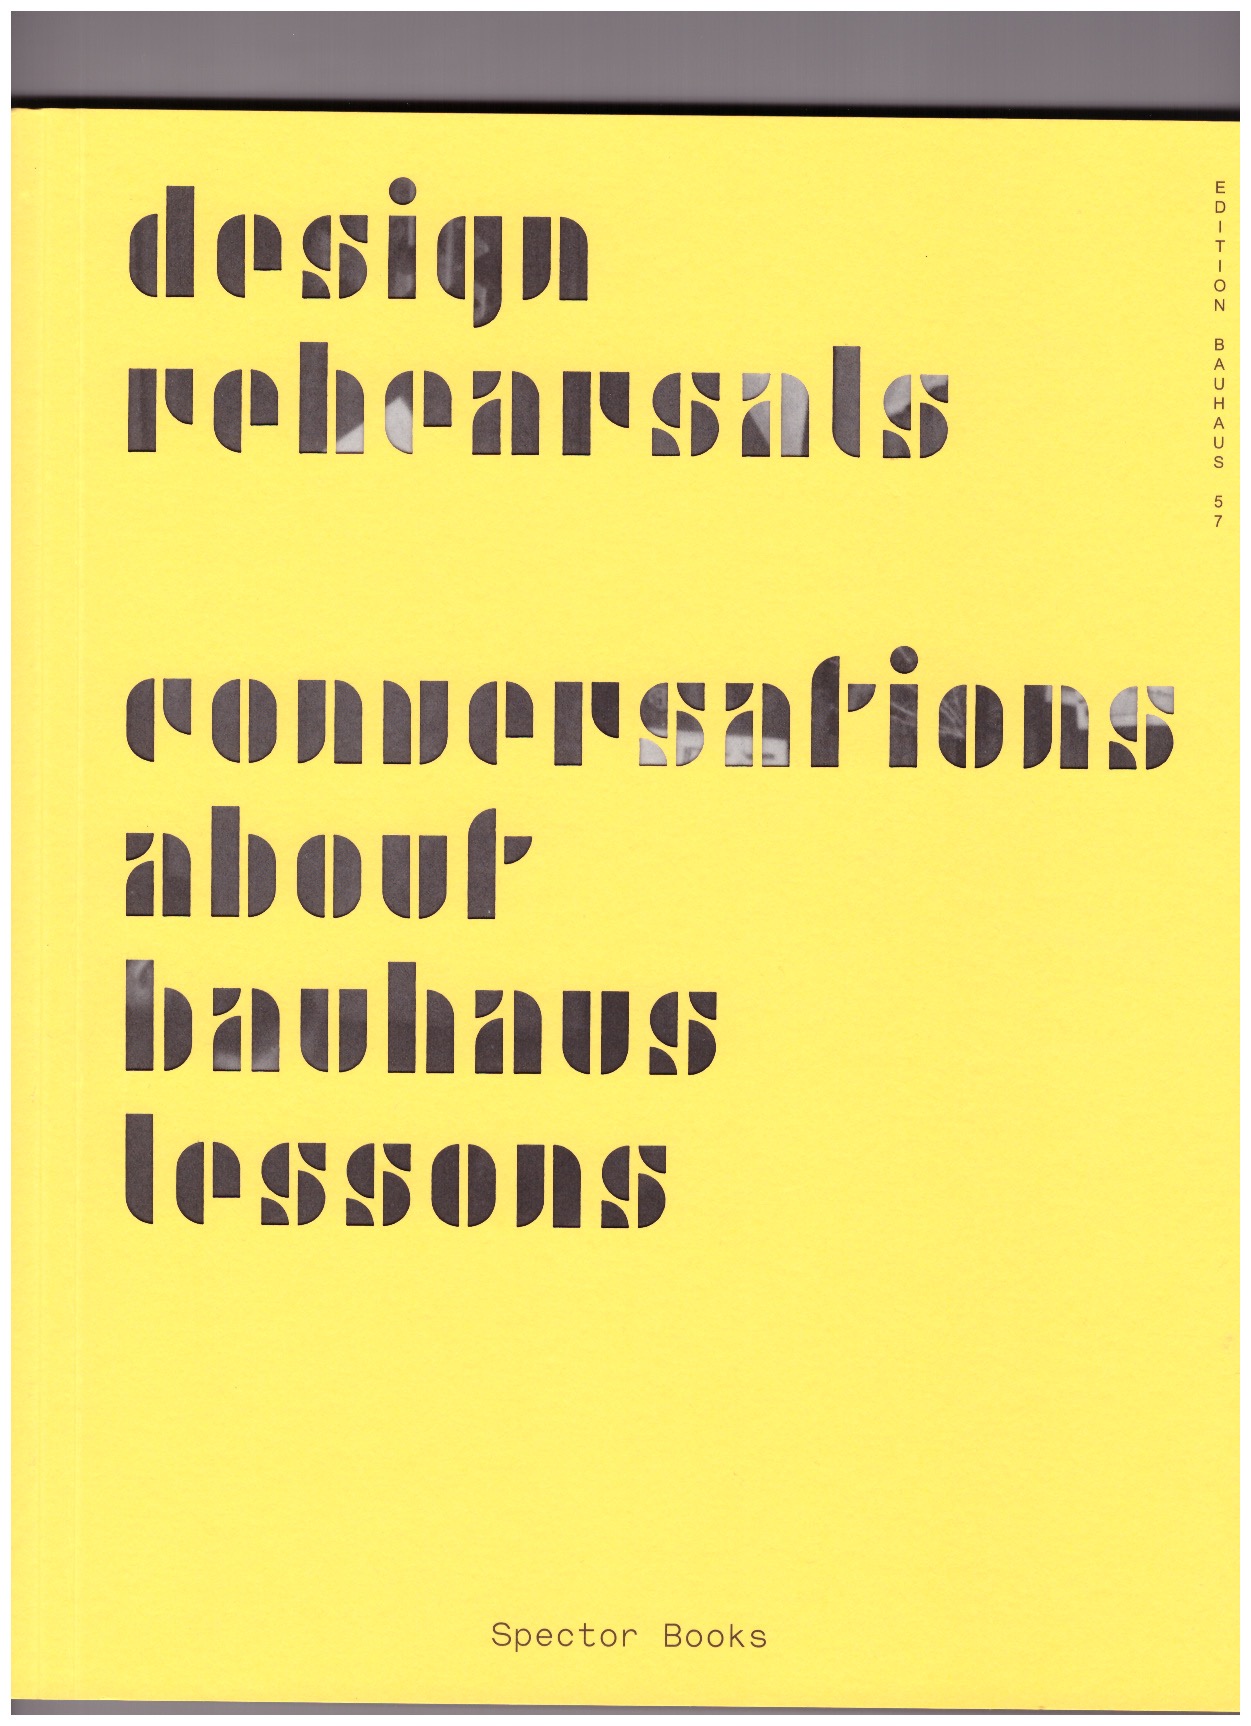 KLAUS, Katja; BITTNER, Regina (eds.) - Design Rehearsals: Conversations about Bauhaus Lessons (Edition Bauhaus 57)